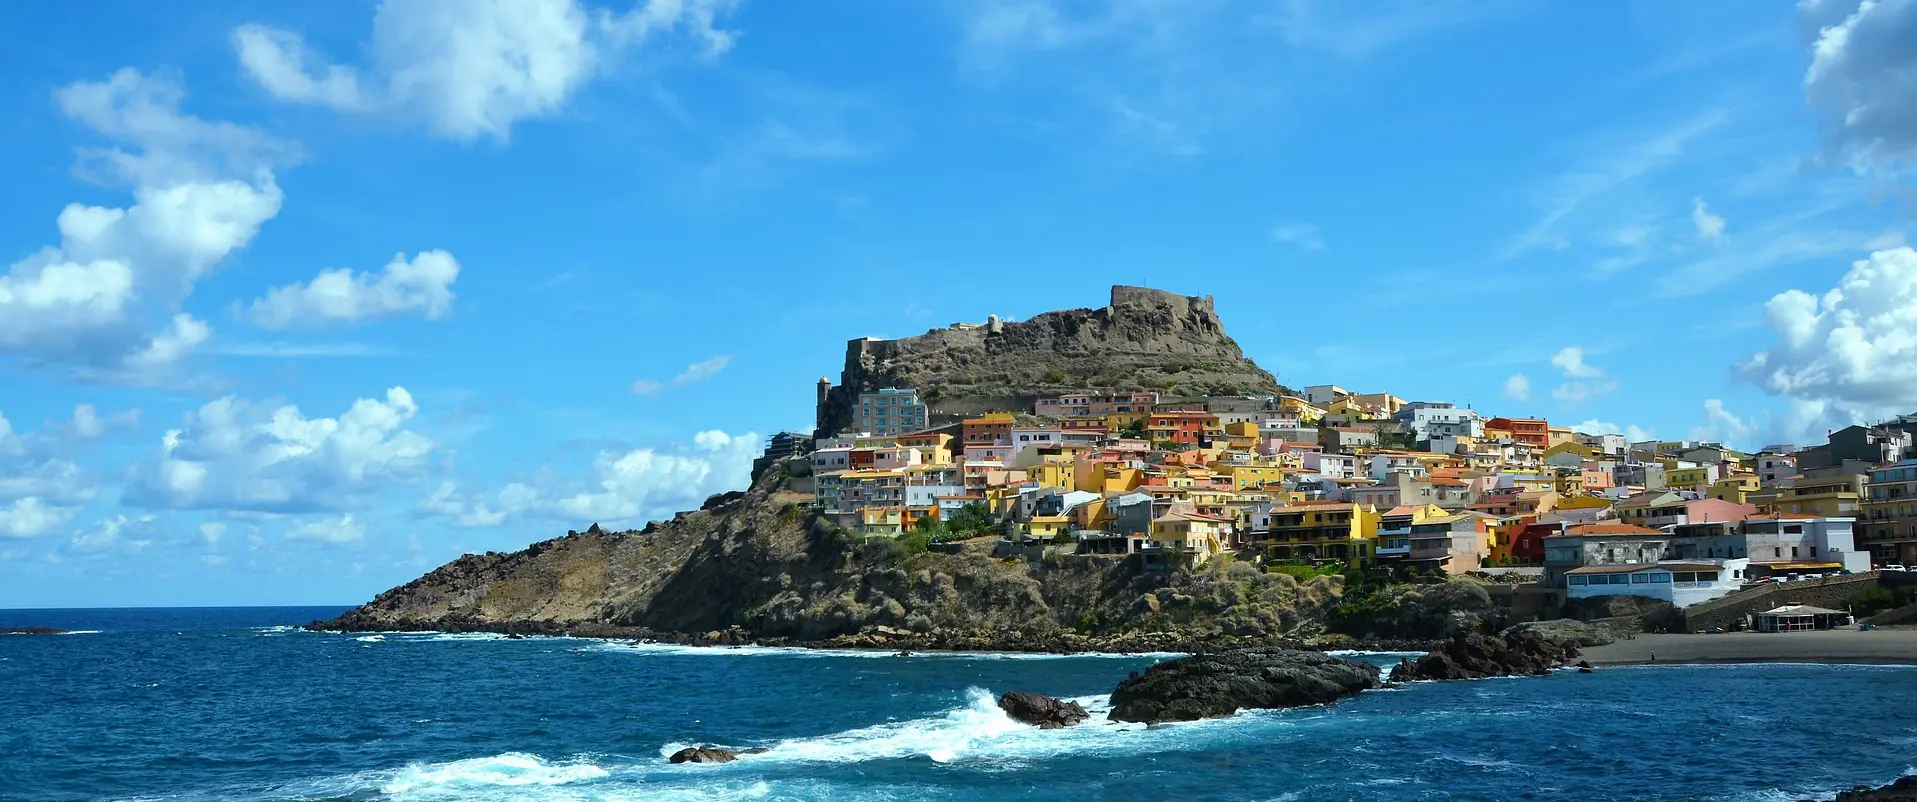 Rundreise Sardinien: smaragdgrüne Insel im Mittelmeer